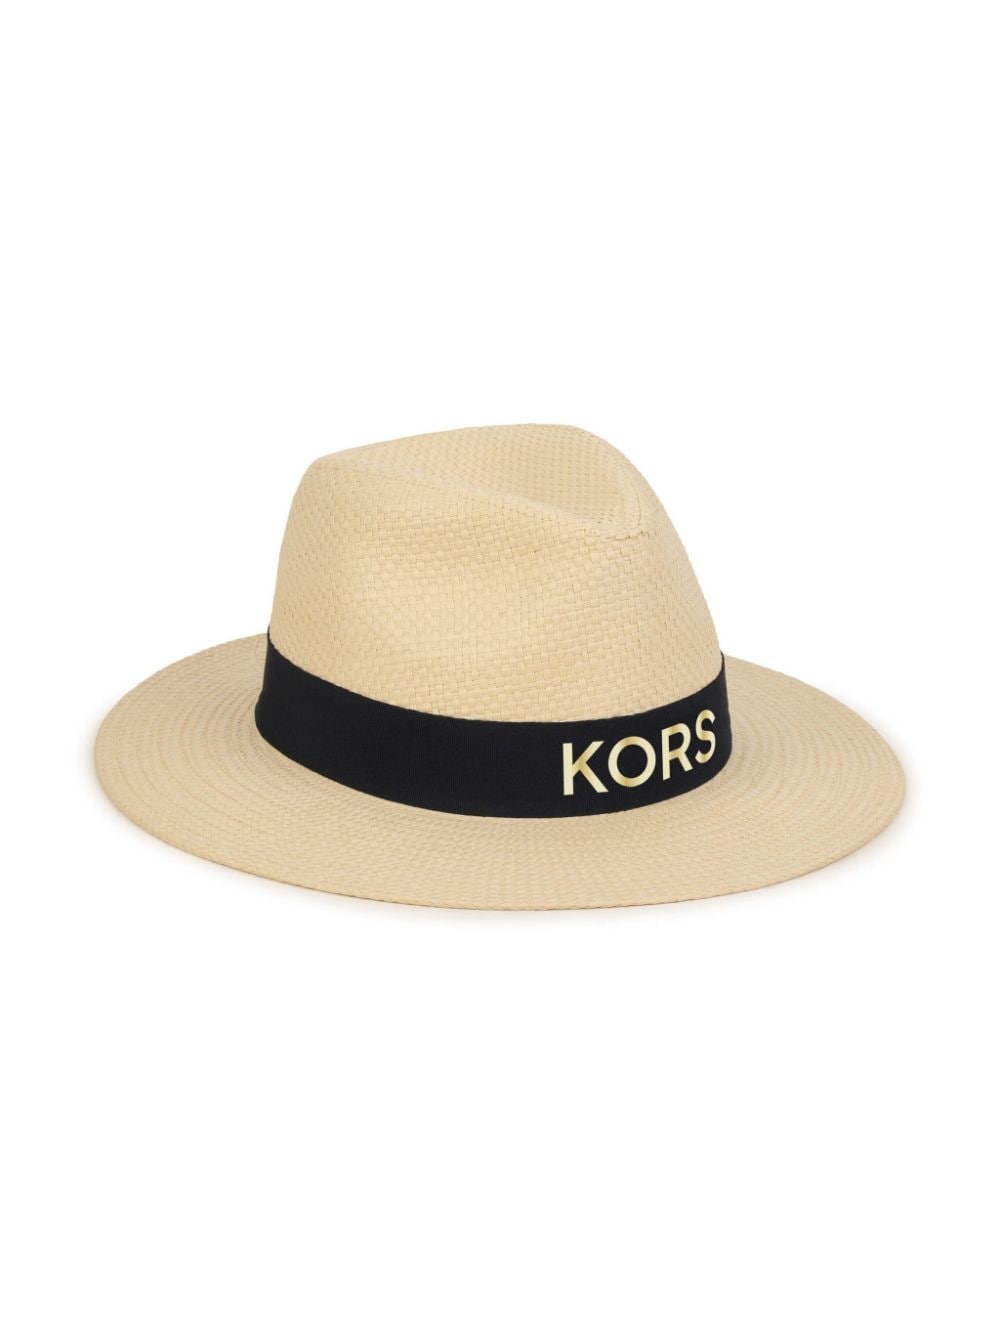 Michael Kors Kids logo-strap sun hat - Neutrals von Michael Kors Kids